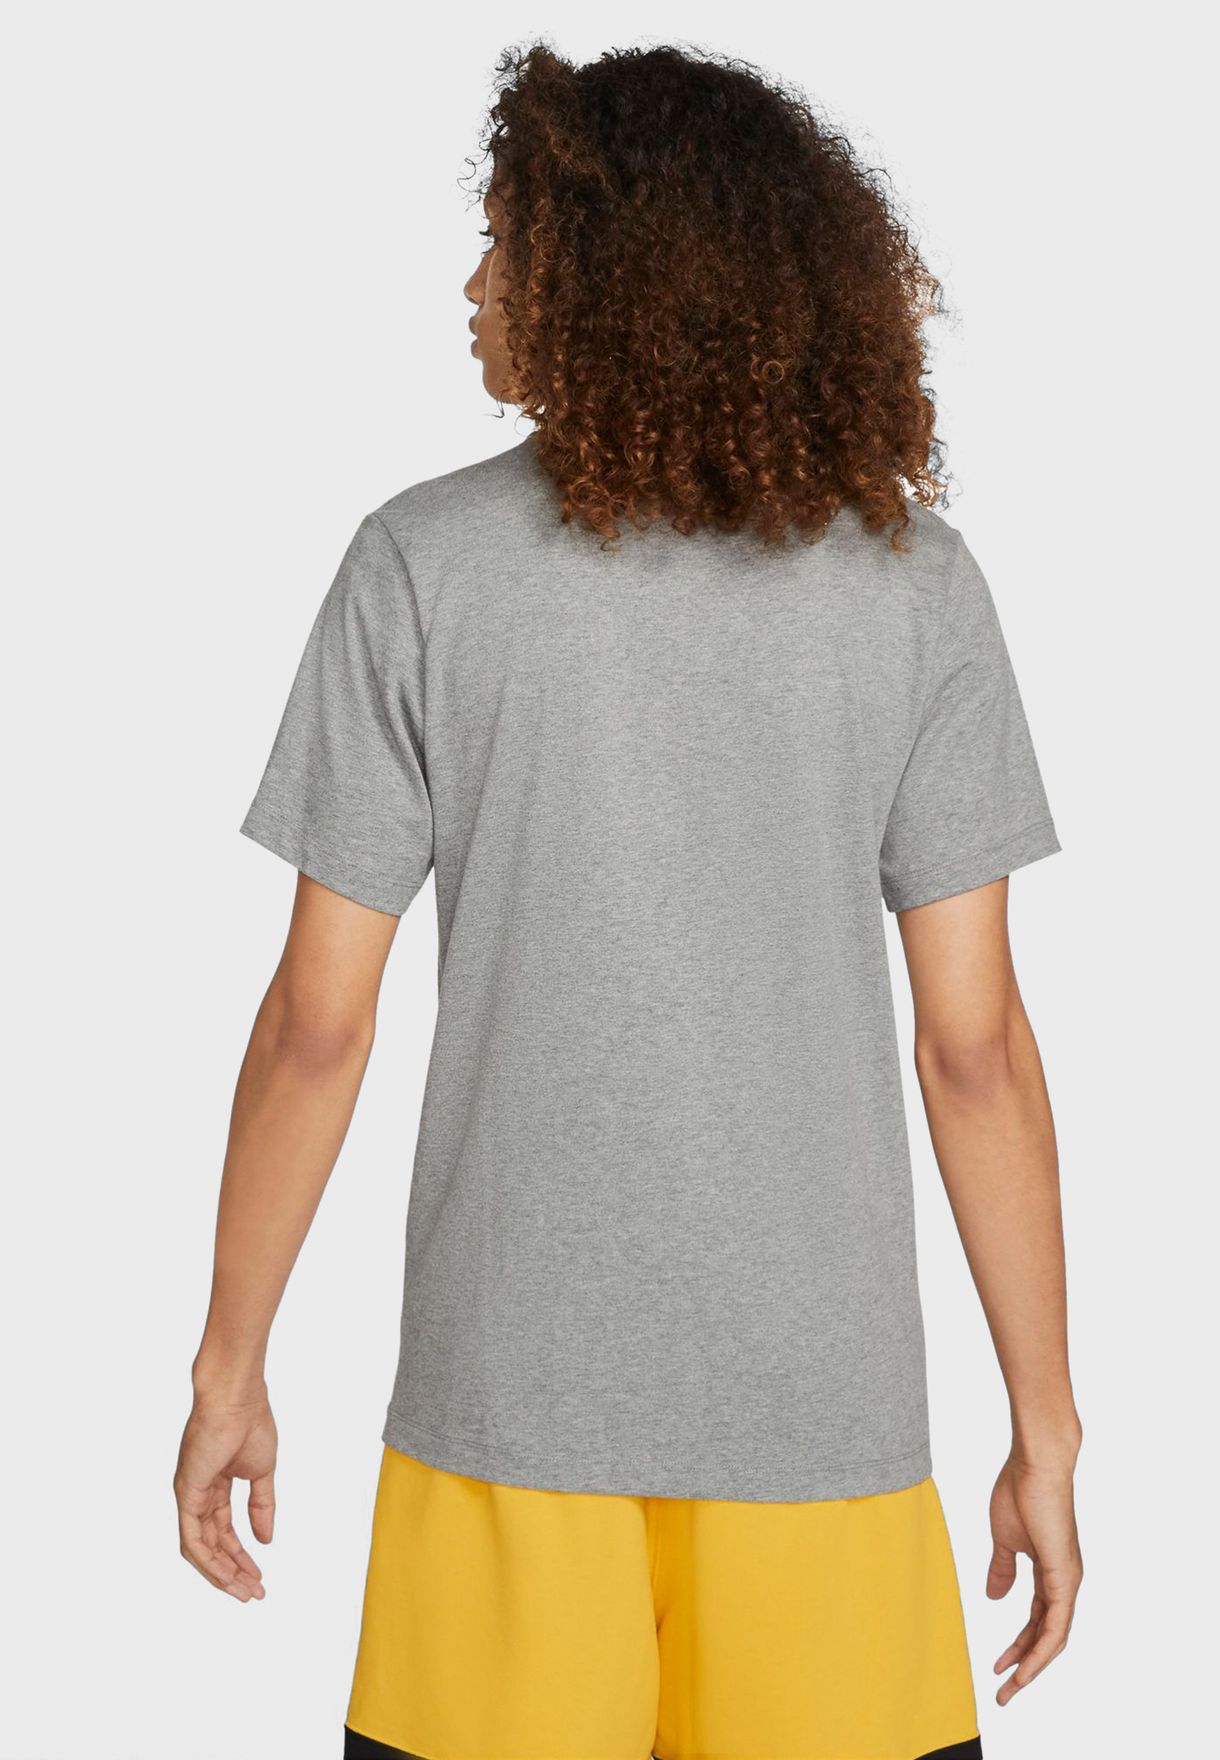 Jordan Jumpman Graphic T-Shirt